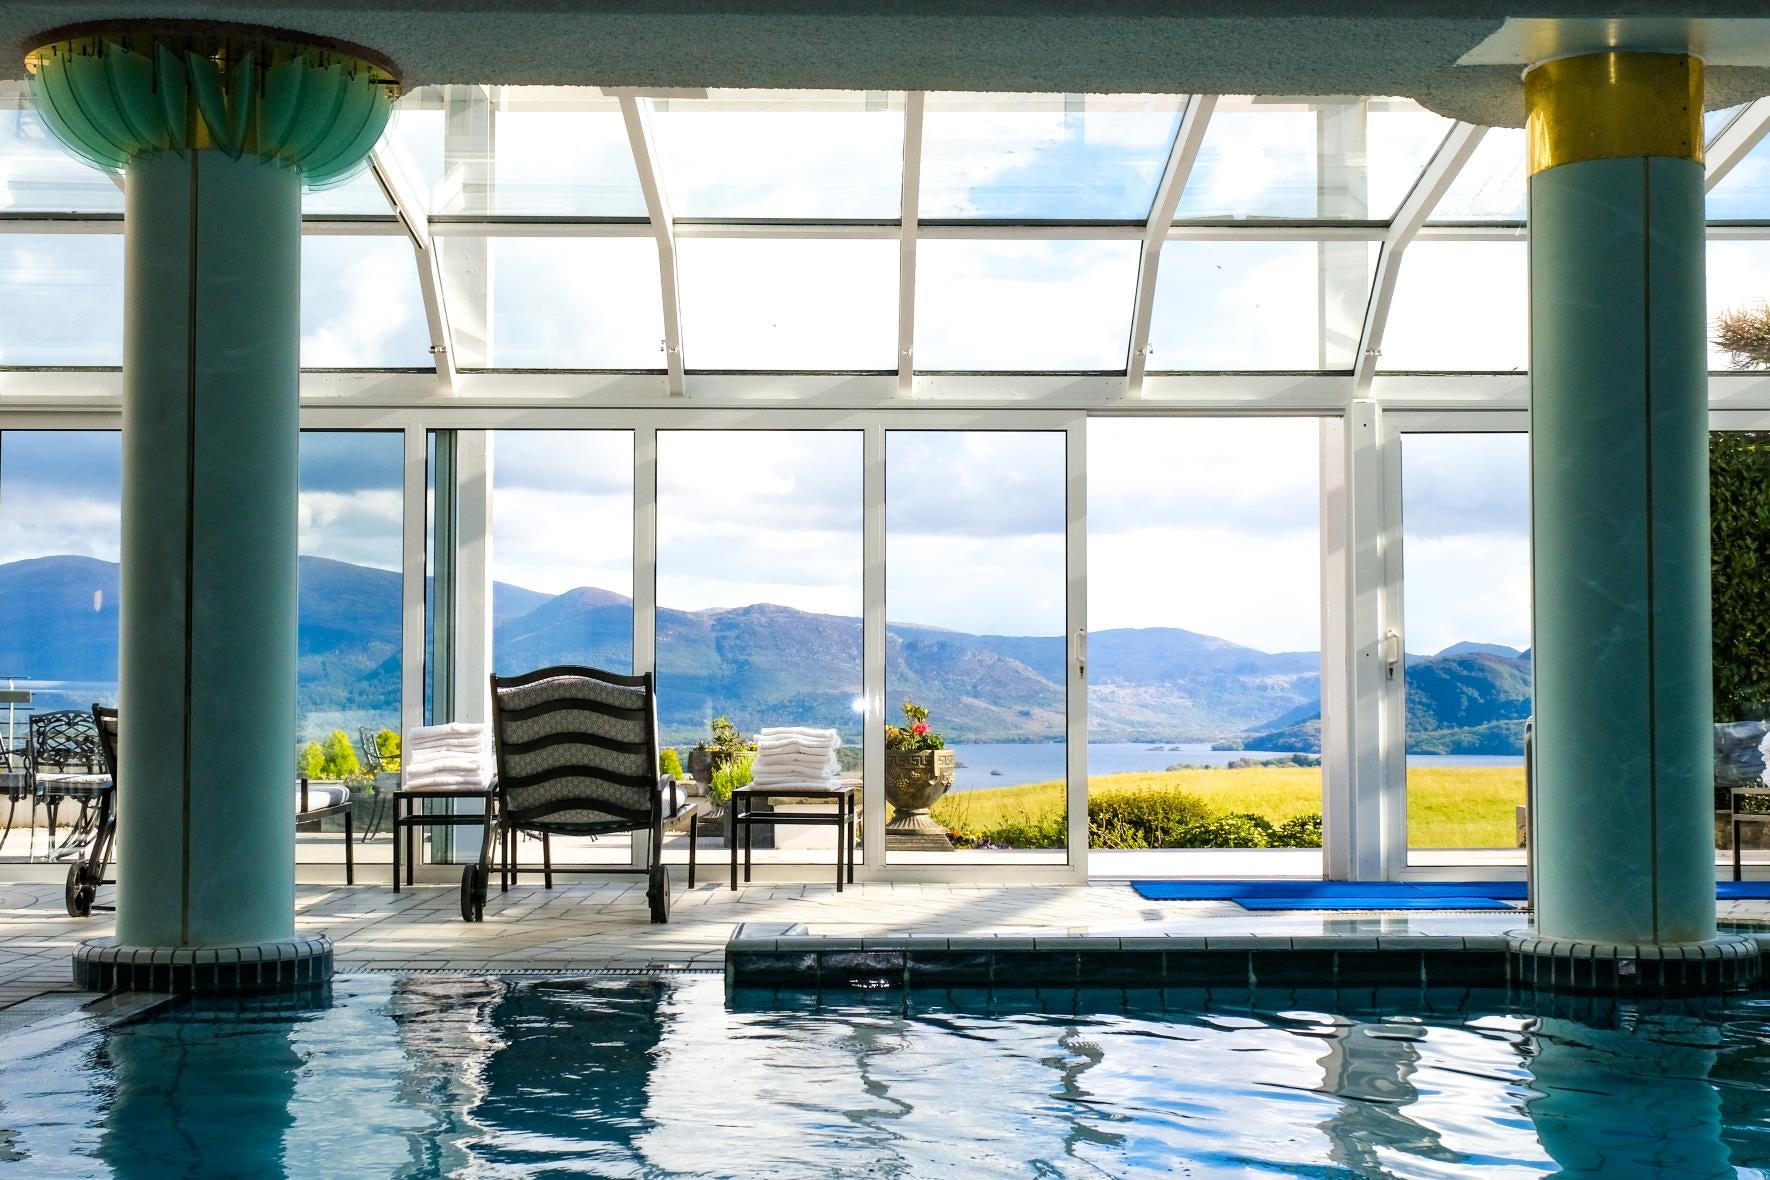 The Best Luxury Hotels in Ireland